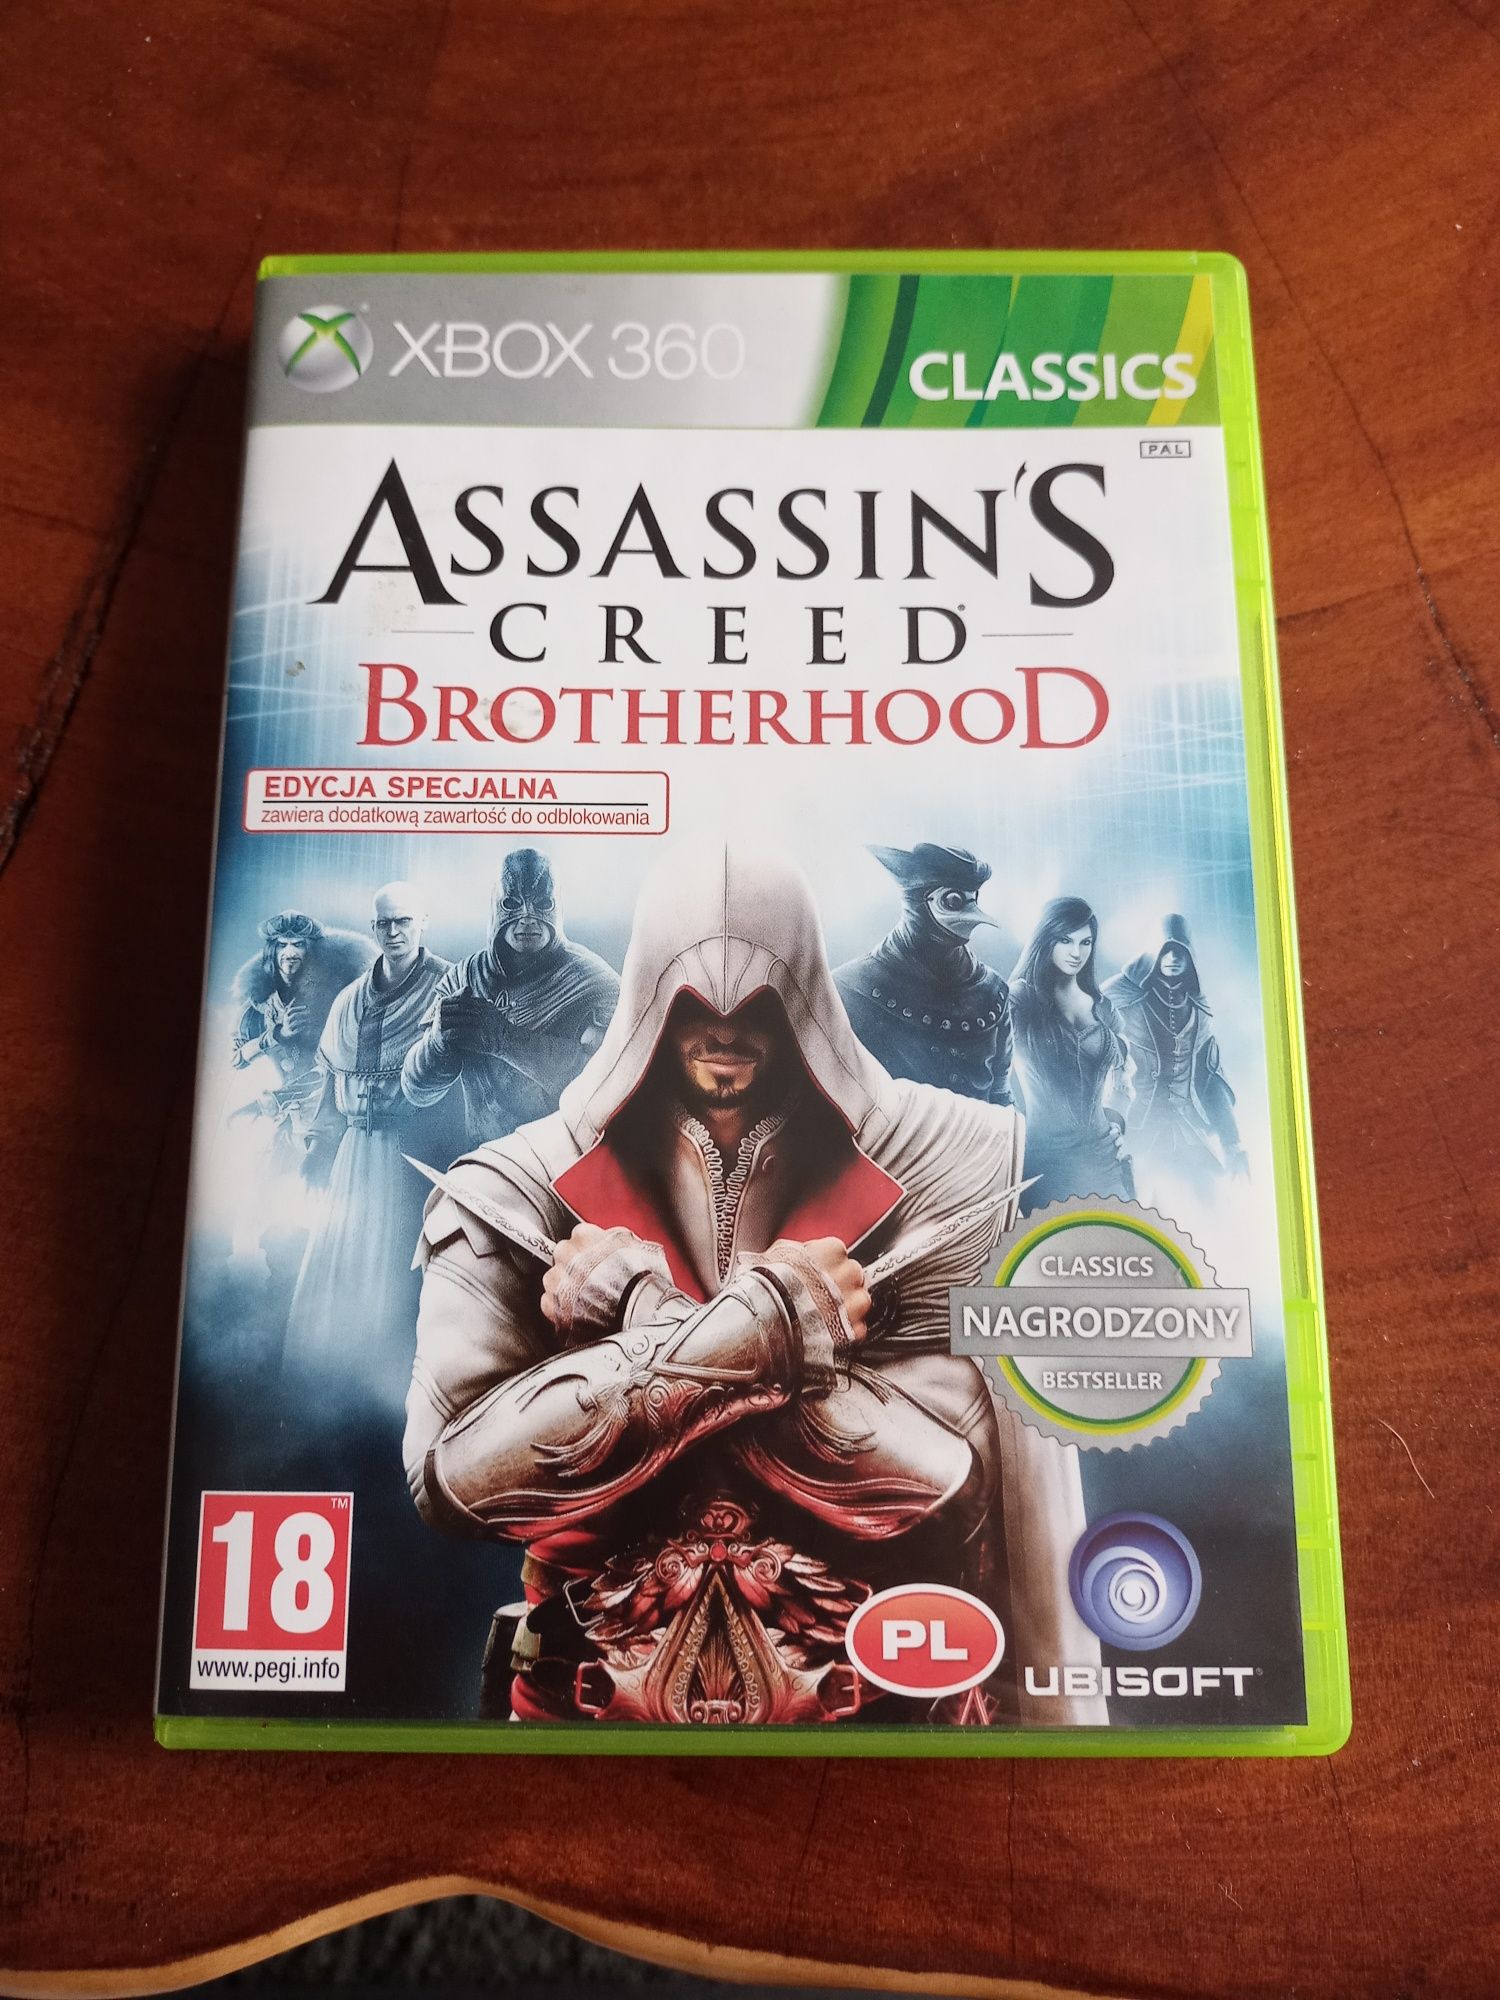 Sprzedam grę na Xbox 360 Assassins Creed Brotherhood